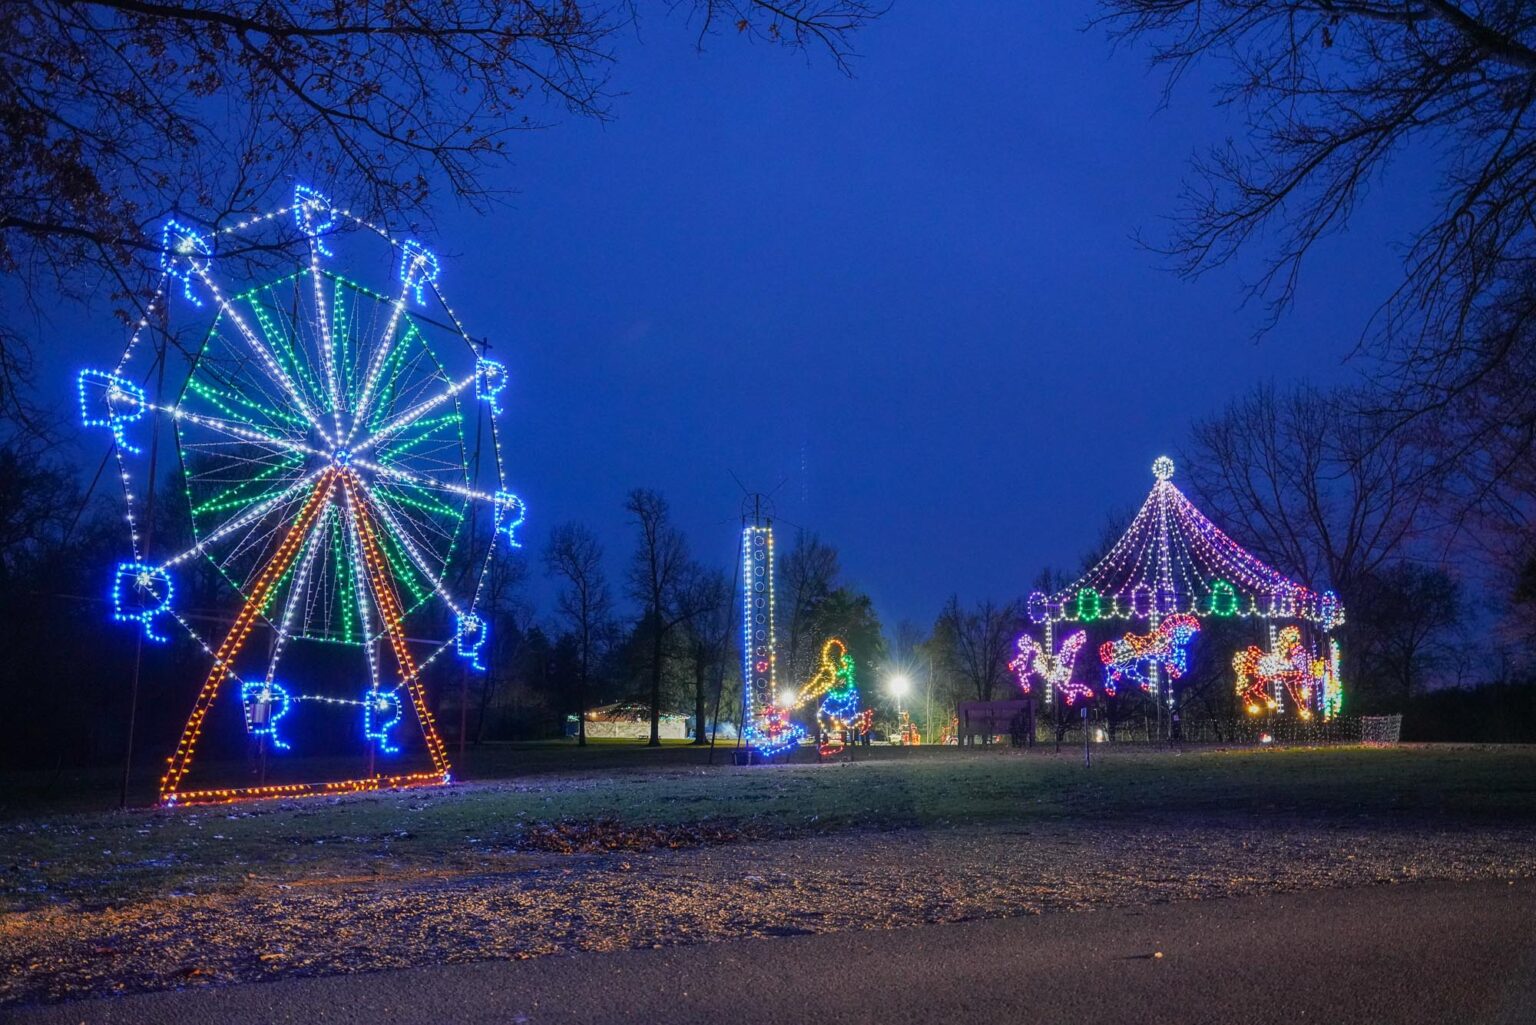 Oglebay's Festival of Lights is Worth Driving to W. Virginia